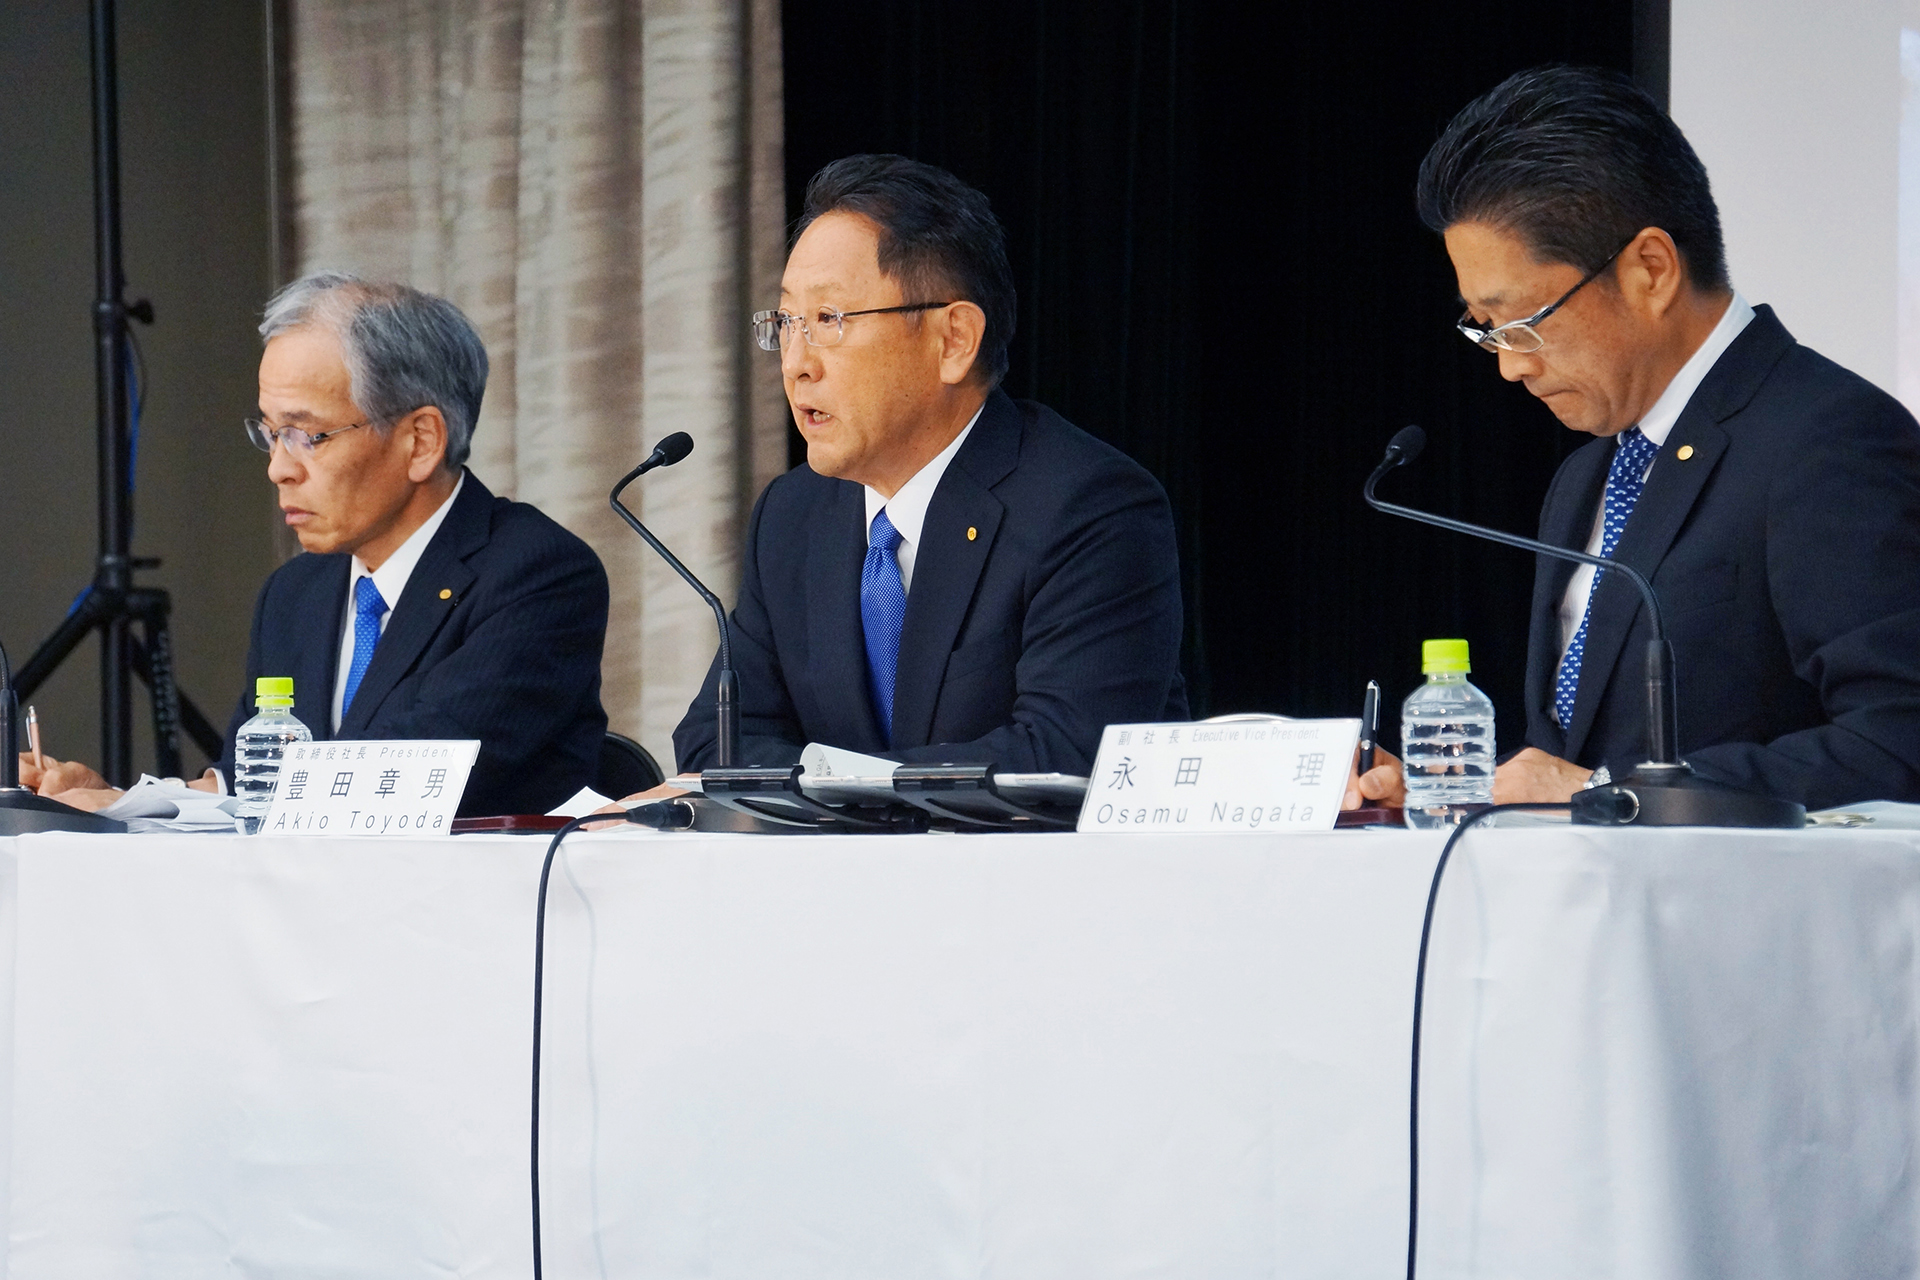 Nobuhiko Murakami, Senior Managing Officer / Akio Toyoda, President, Member of the Board of Directors / Osamu Nagata, Executive Vice President